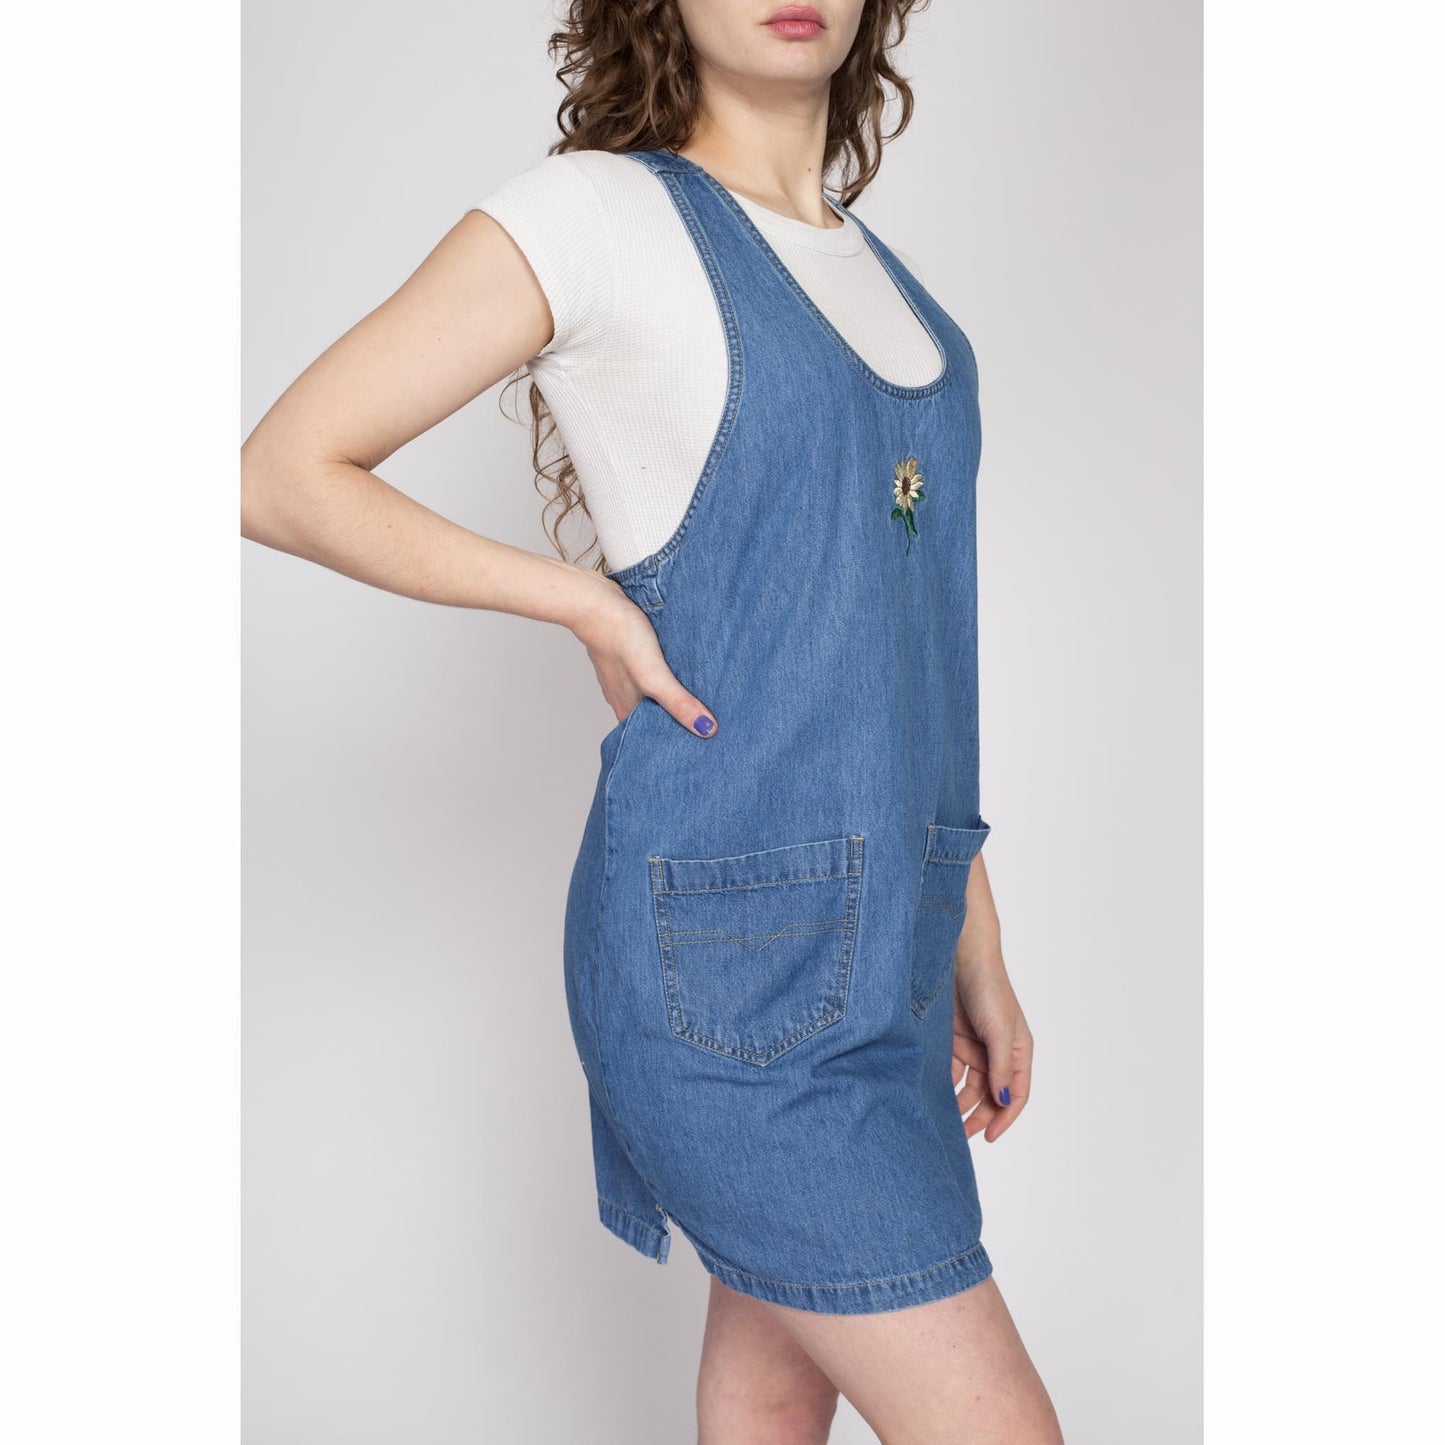 Medium 90s Denim Daisy Pinafore Mini Dress | Vintage Sleeveless Floral Jean Overall Jumper Dress